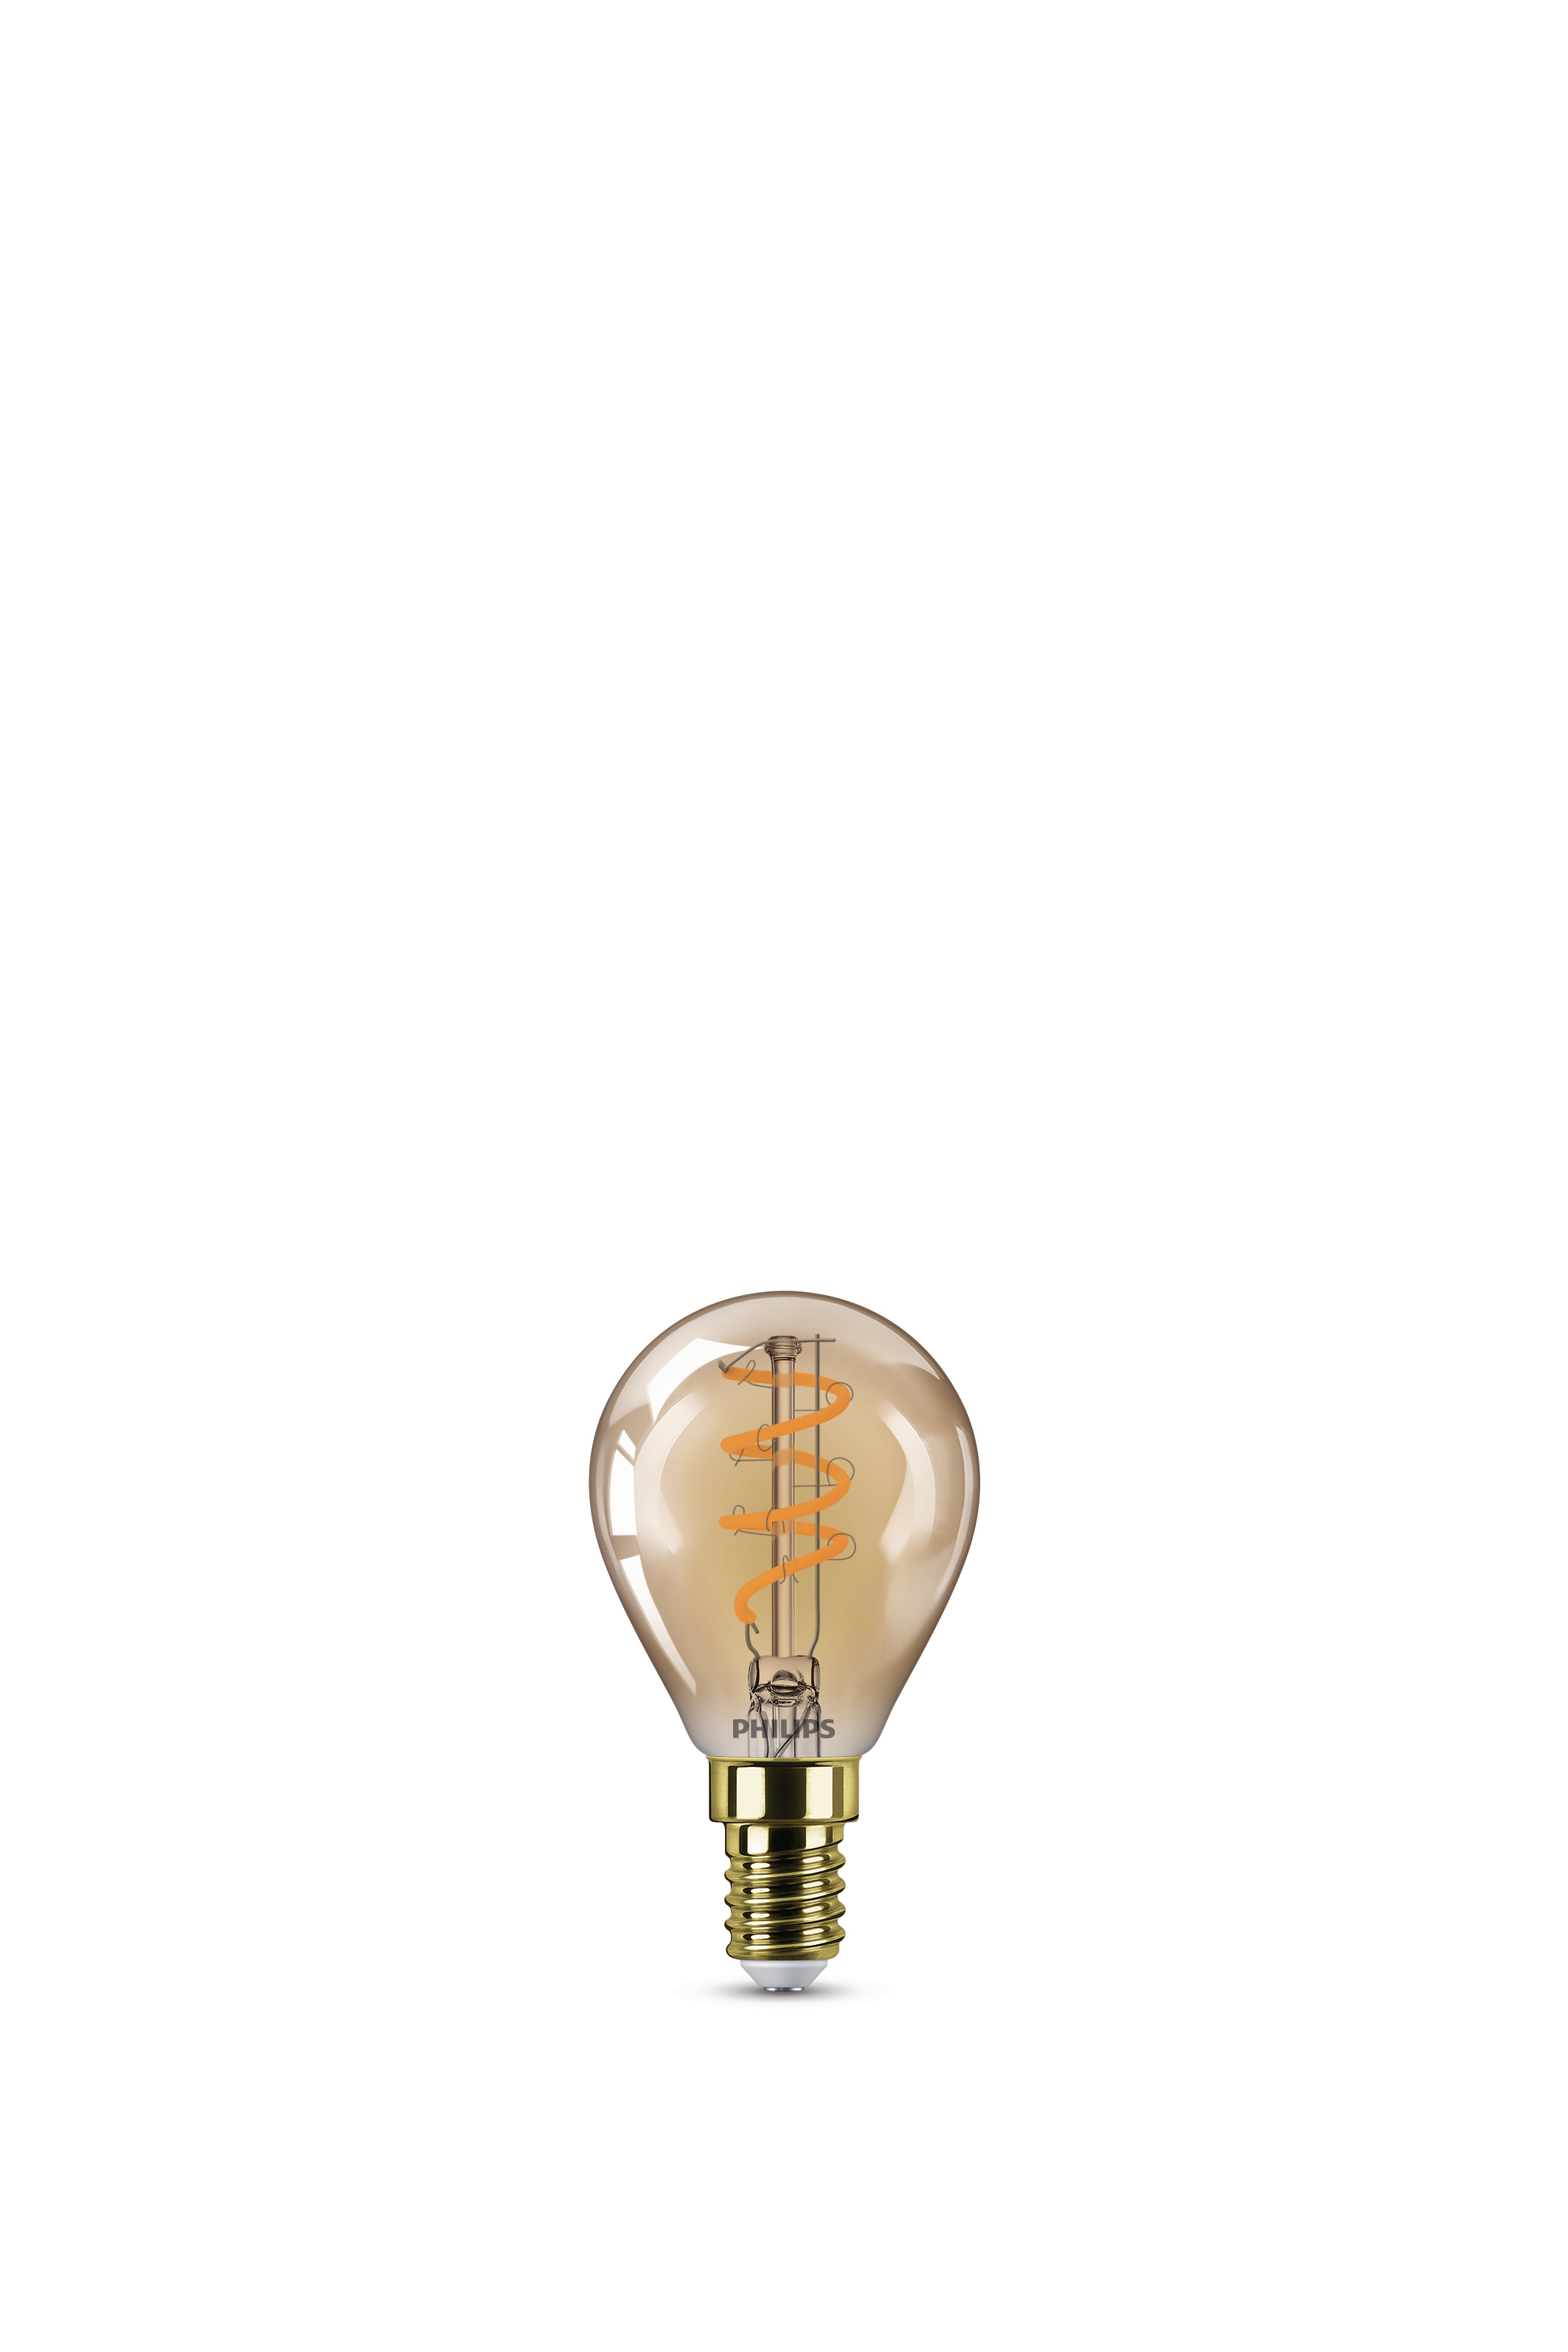 PHILIPS classic Vintage Sockel, Warmweiß dimmbar 15W, mit LED Lampe E14 Tropfenlampe